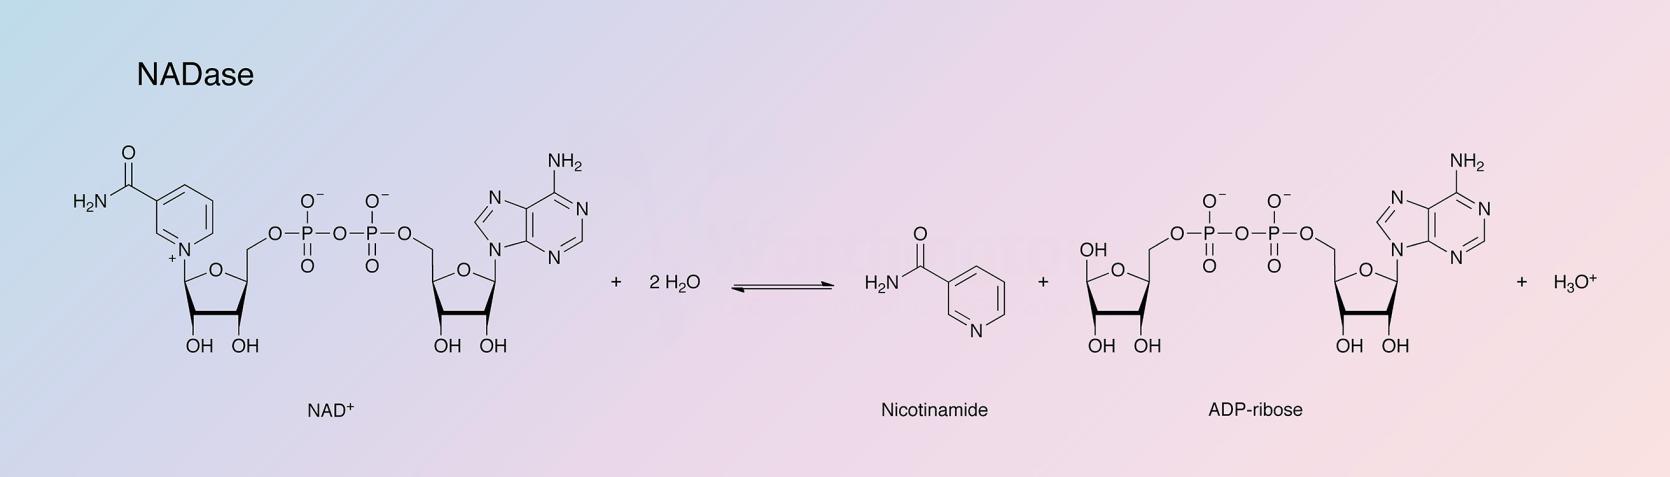 NADase  Enzymatic Reaction